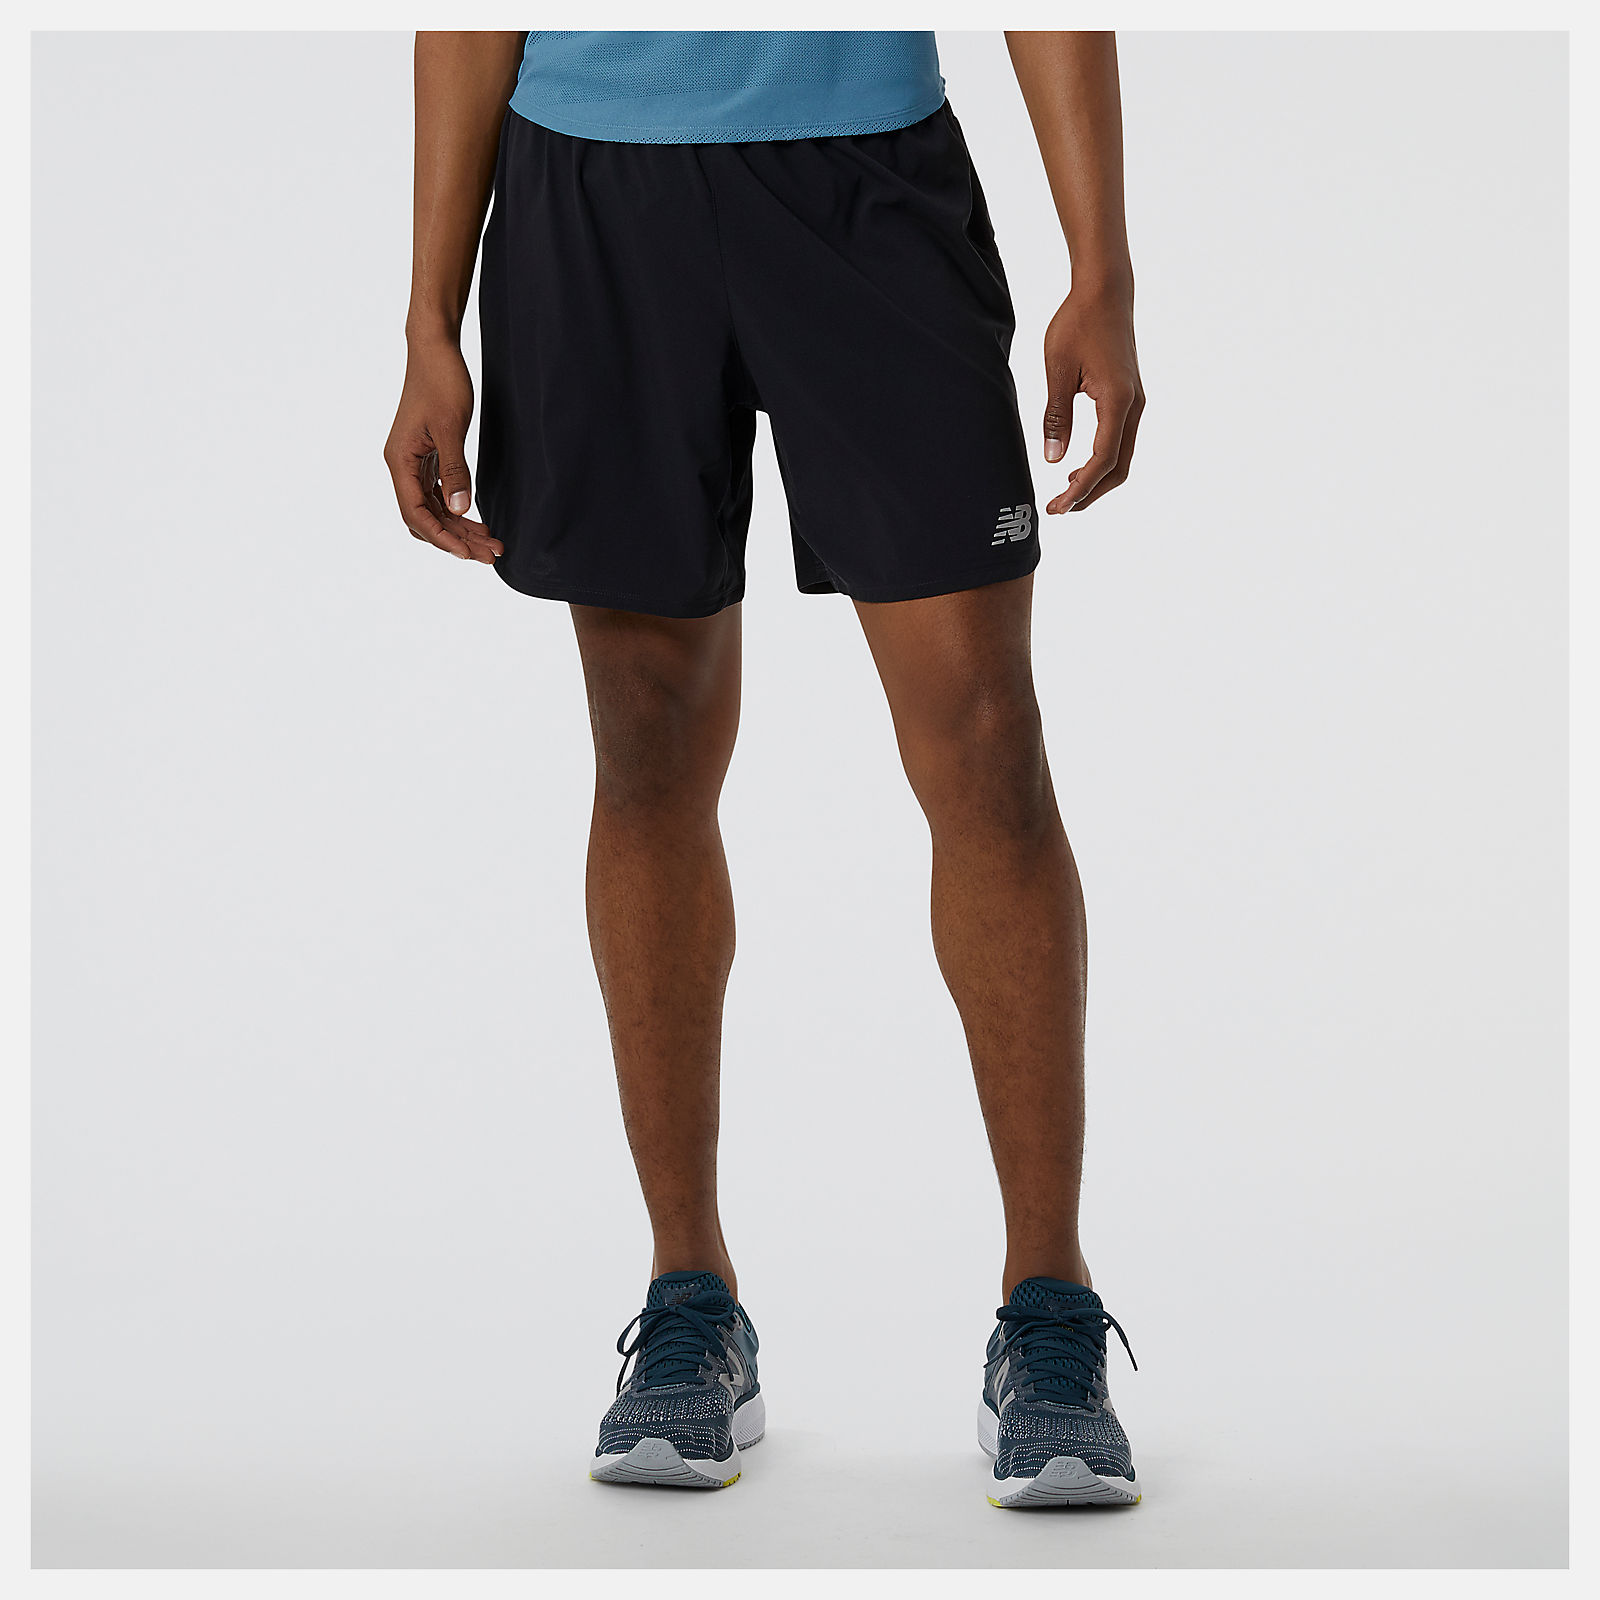 Neu Men's Double-layer Shorts Large Size Quick Dry Fitness Pocket Shorts Sports 